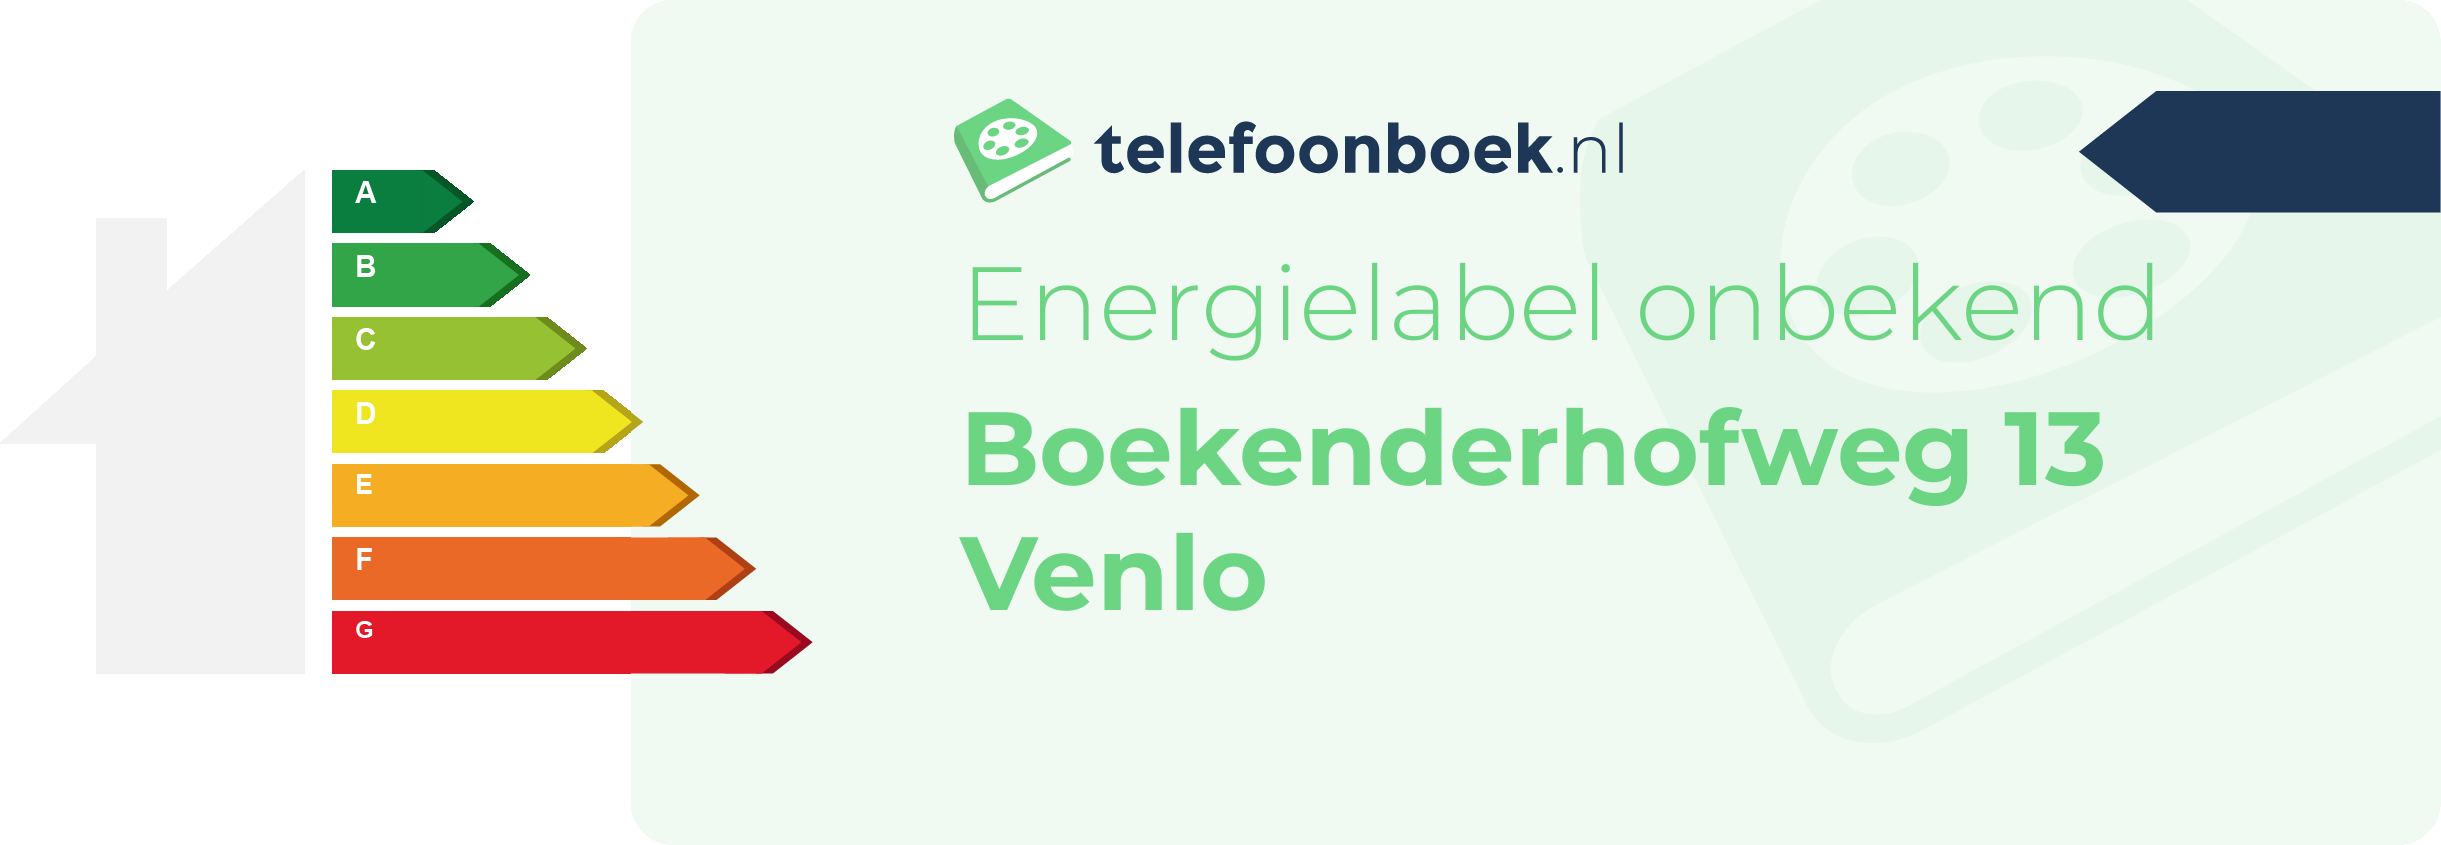 Energielabel Boekenderhofweg 13 Venlo